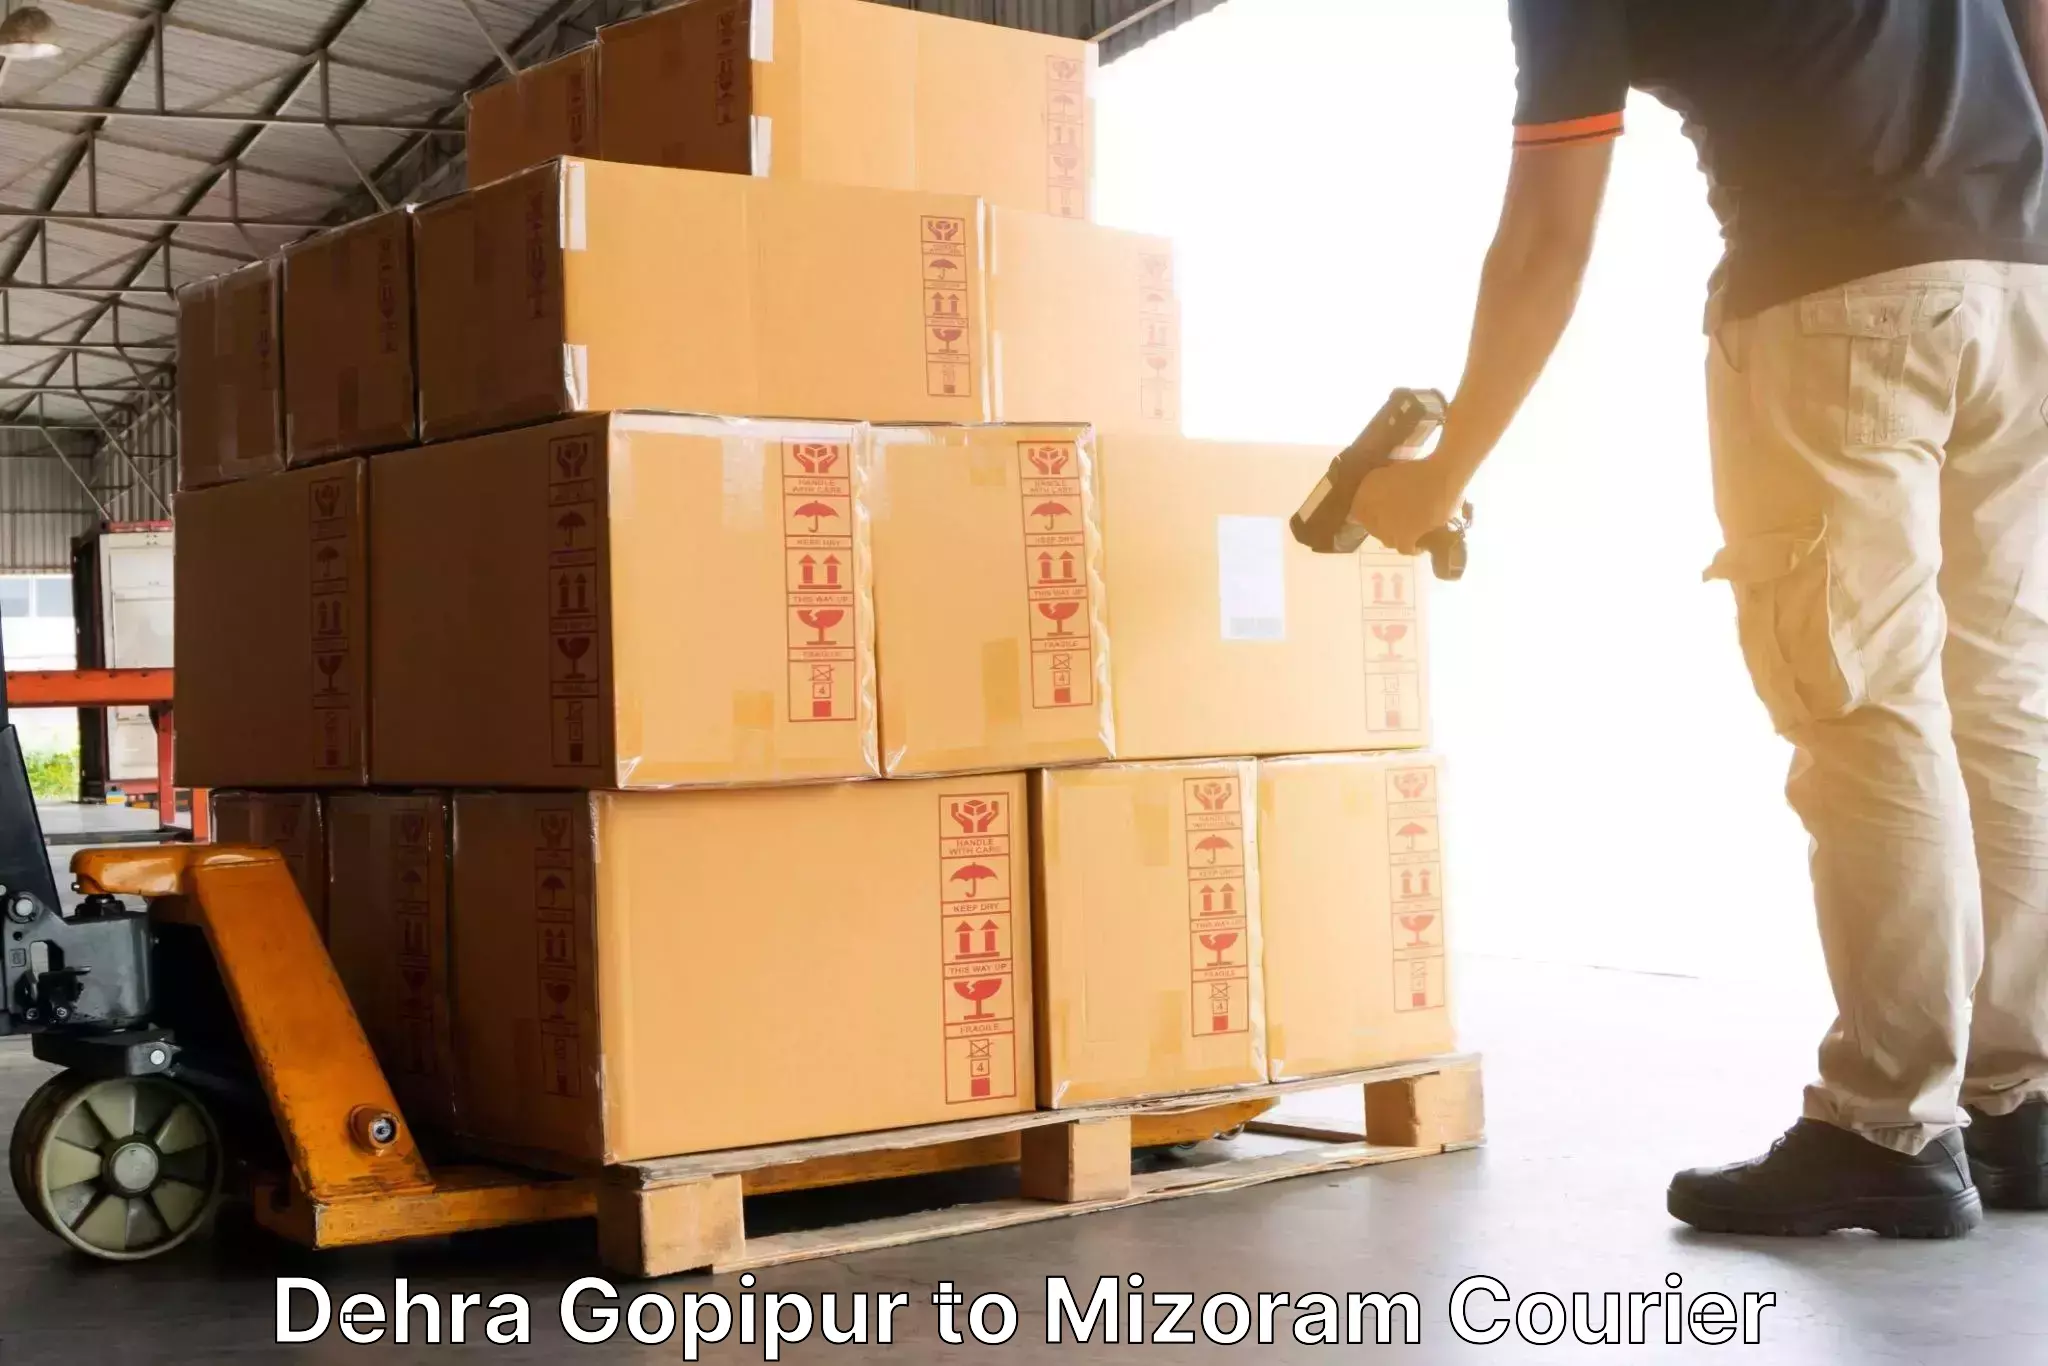 International parcel service Dehra Gopipur to Mizoram